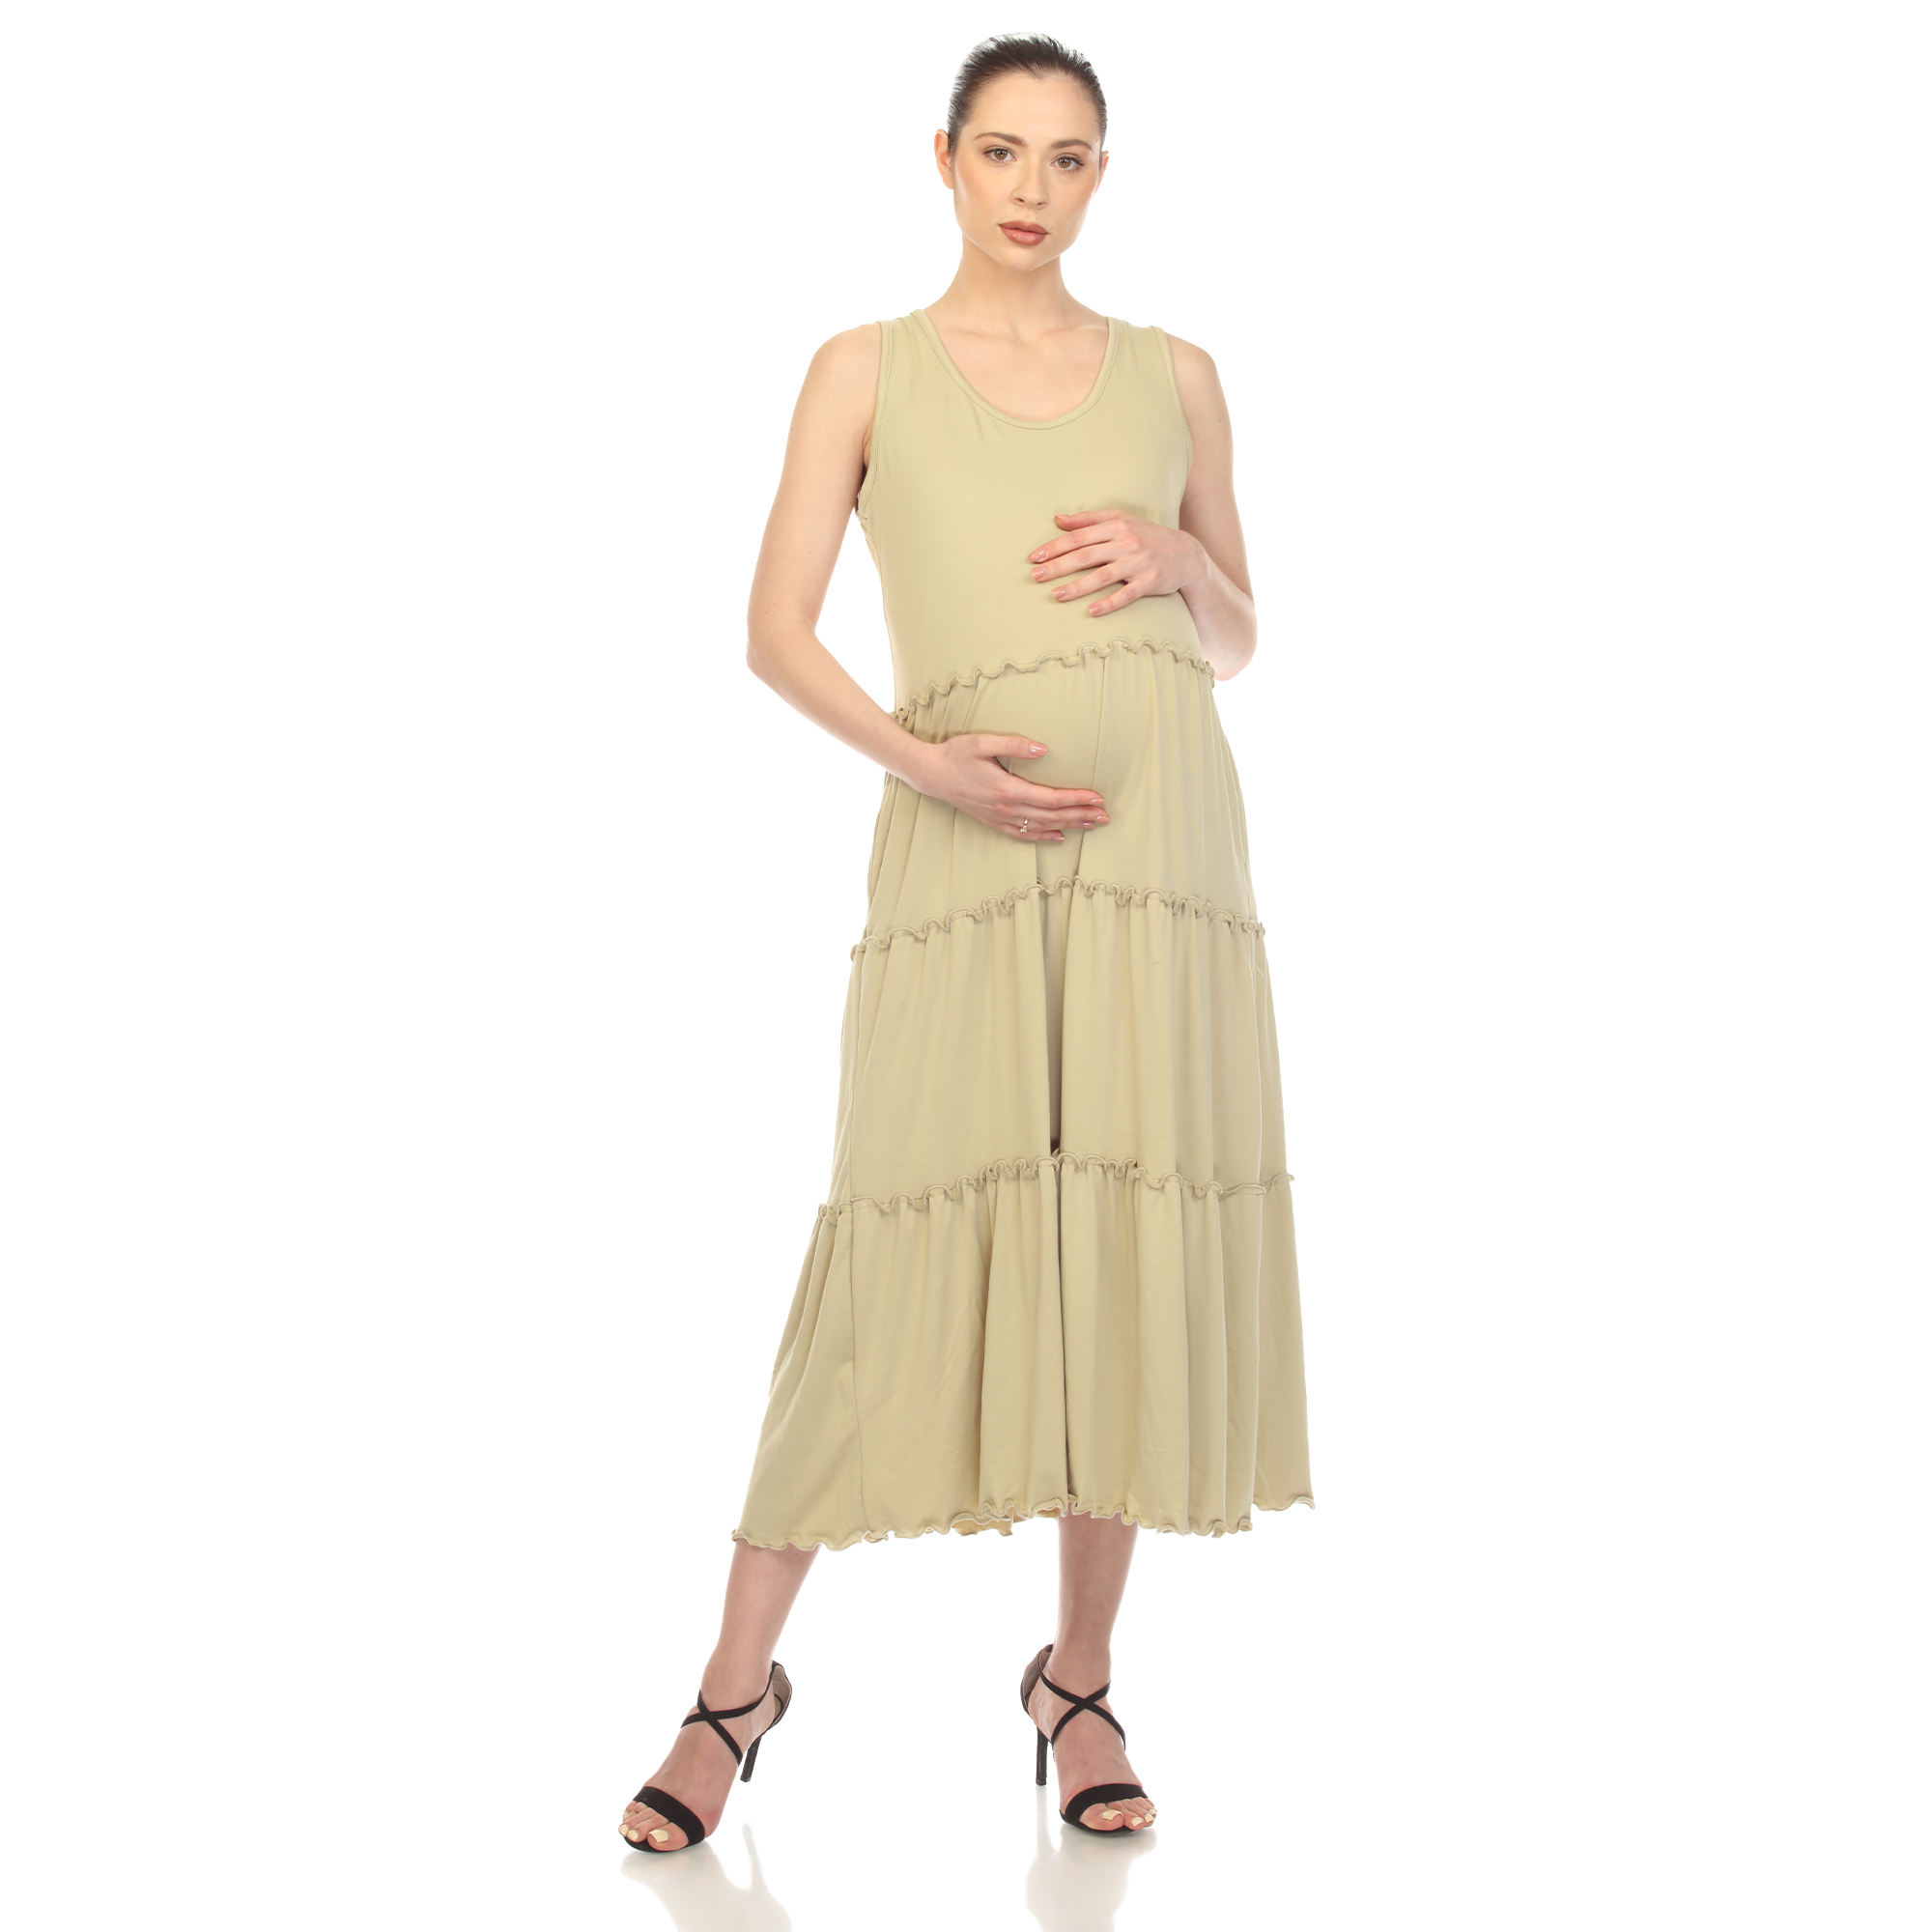 White Mark Women's Maternity Scoop Neck Tiered Midi Dress - Pale Olive, 3X